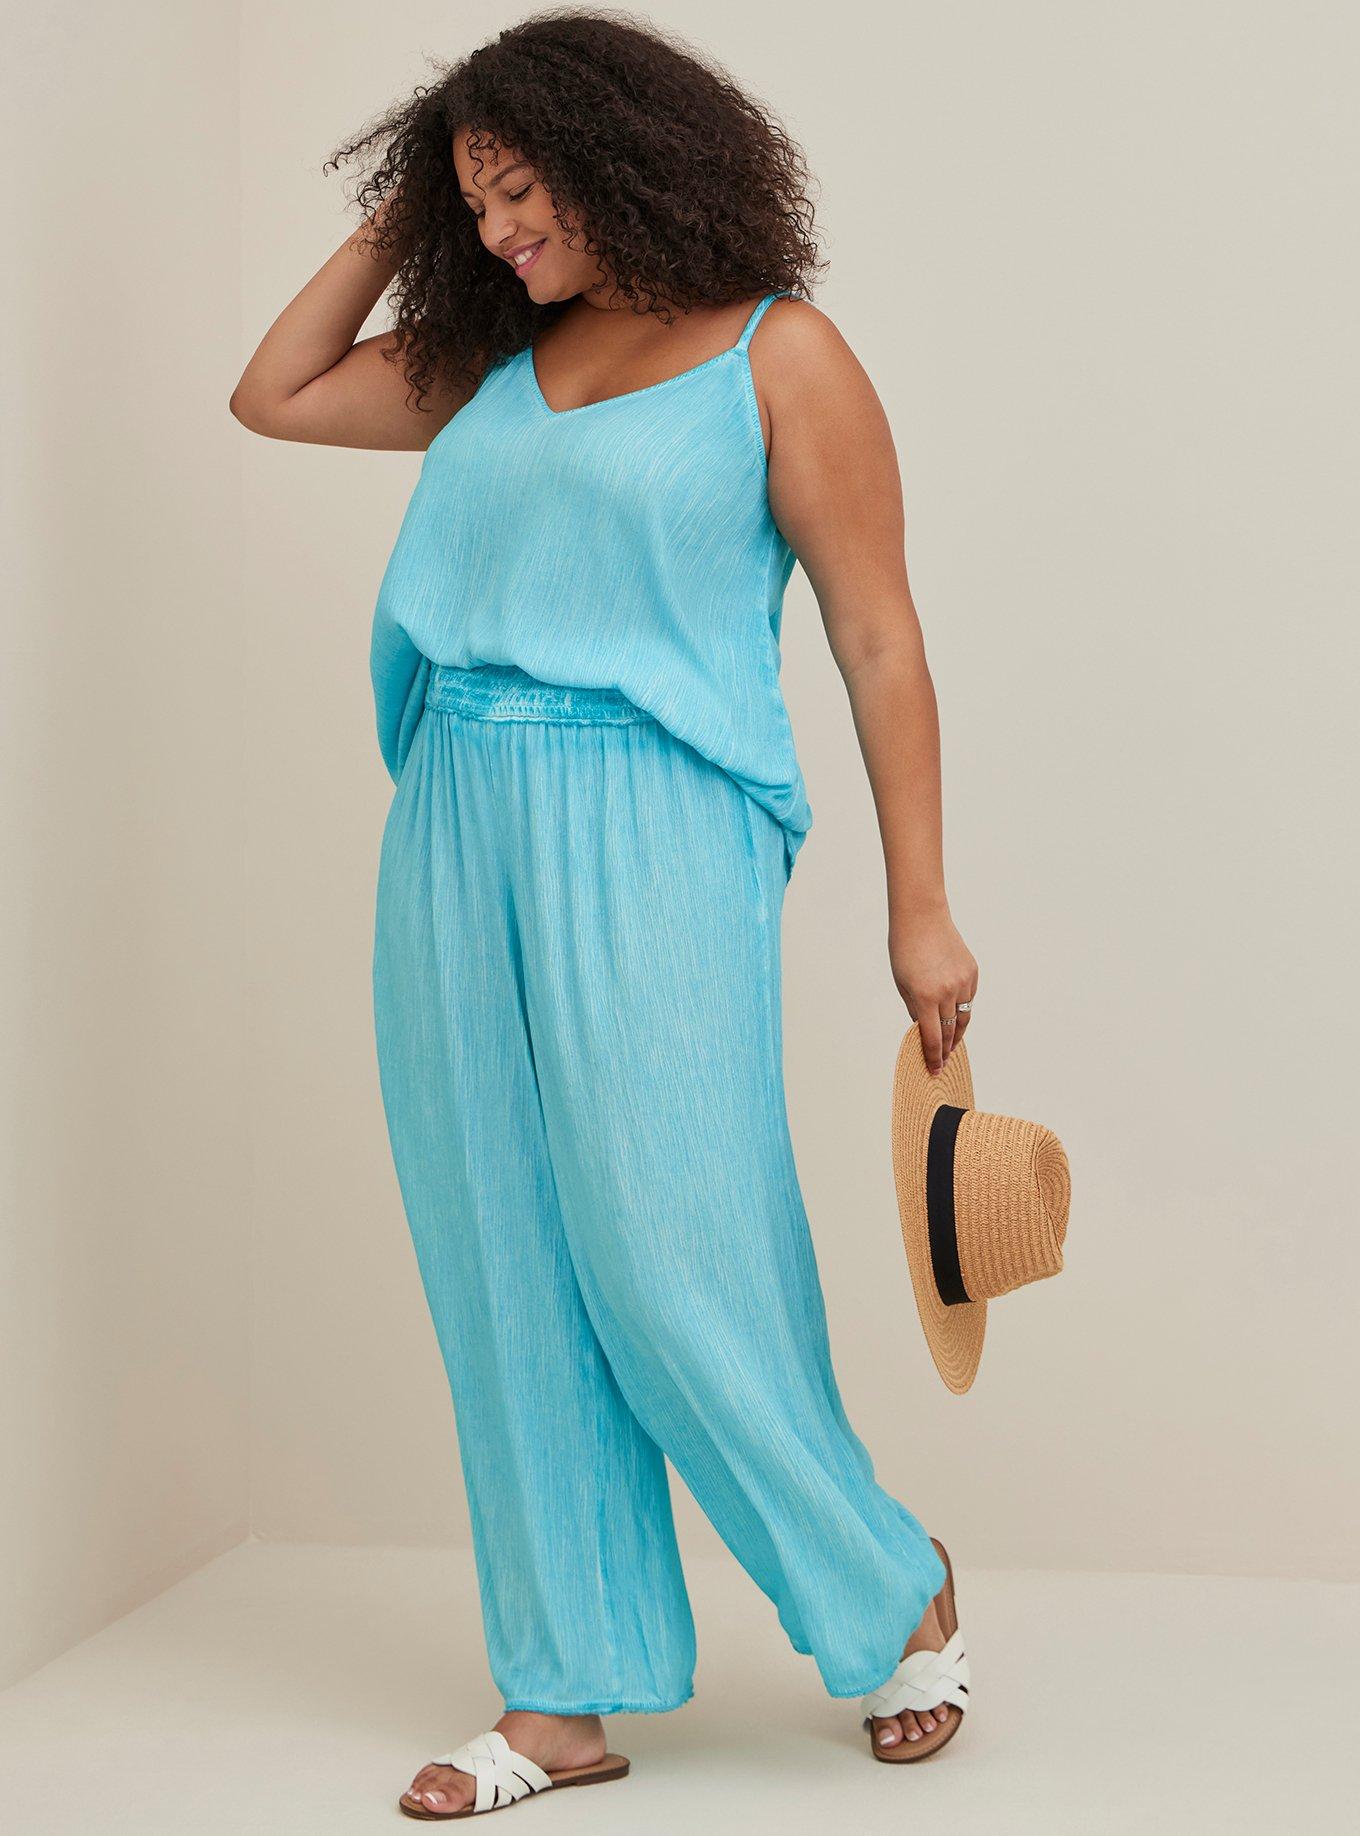 Buy Women's Gauze Cotton Capri Beach Pants with Pockets (Turquoise